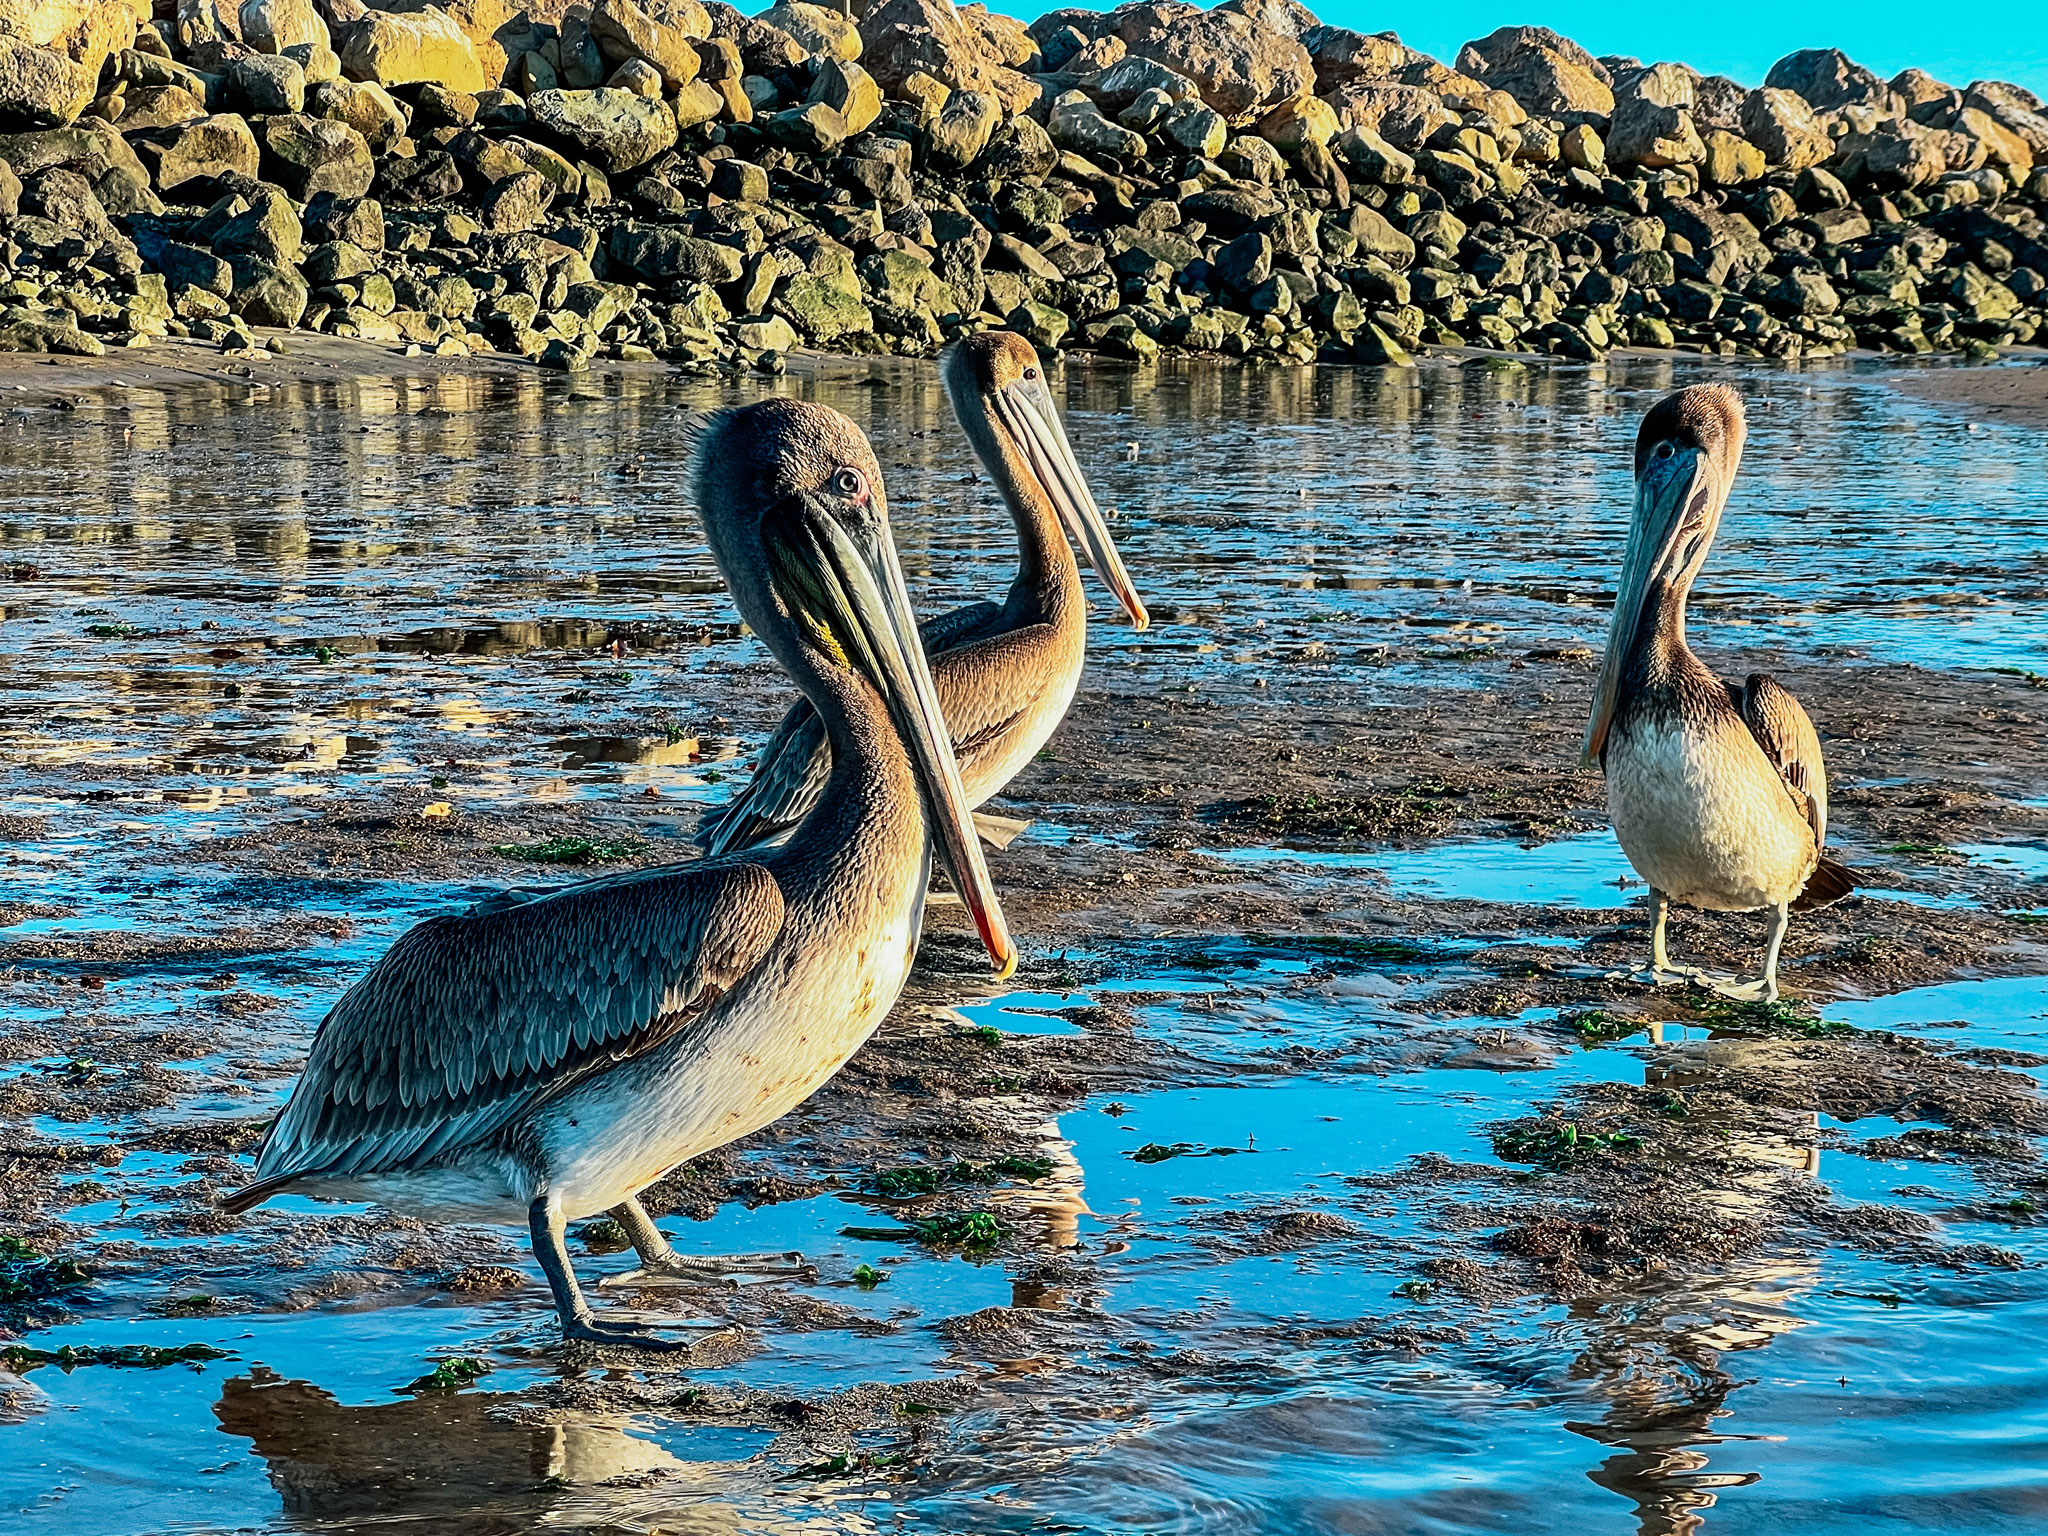 Brown pelicans in the Santa Barbara Harbor